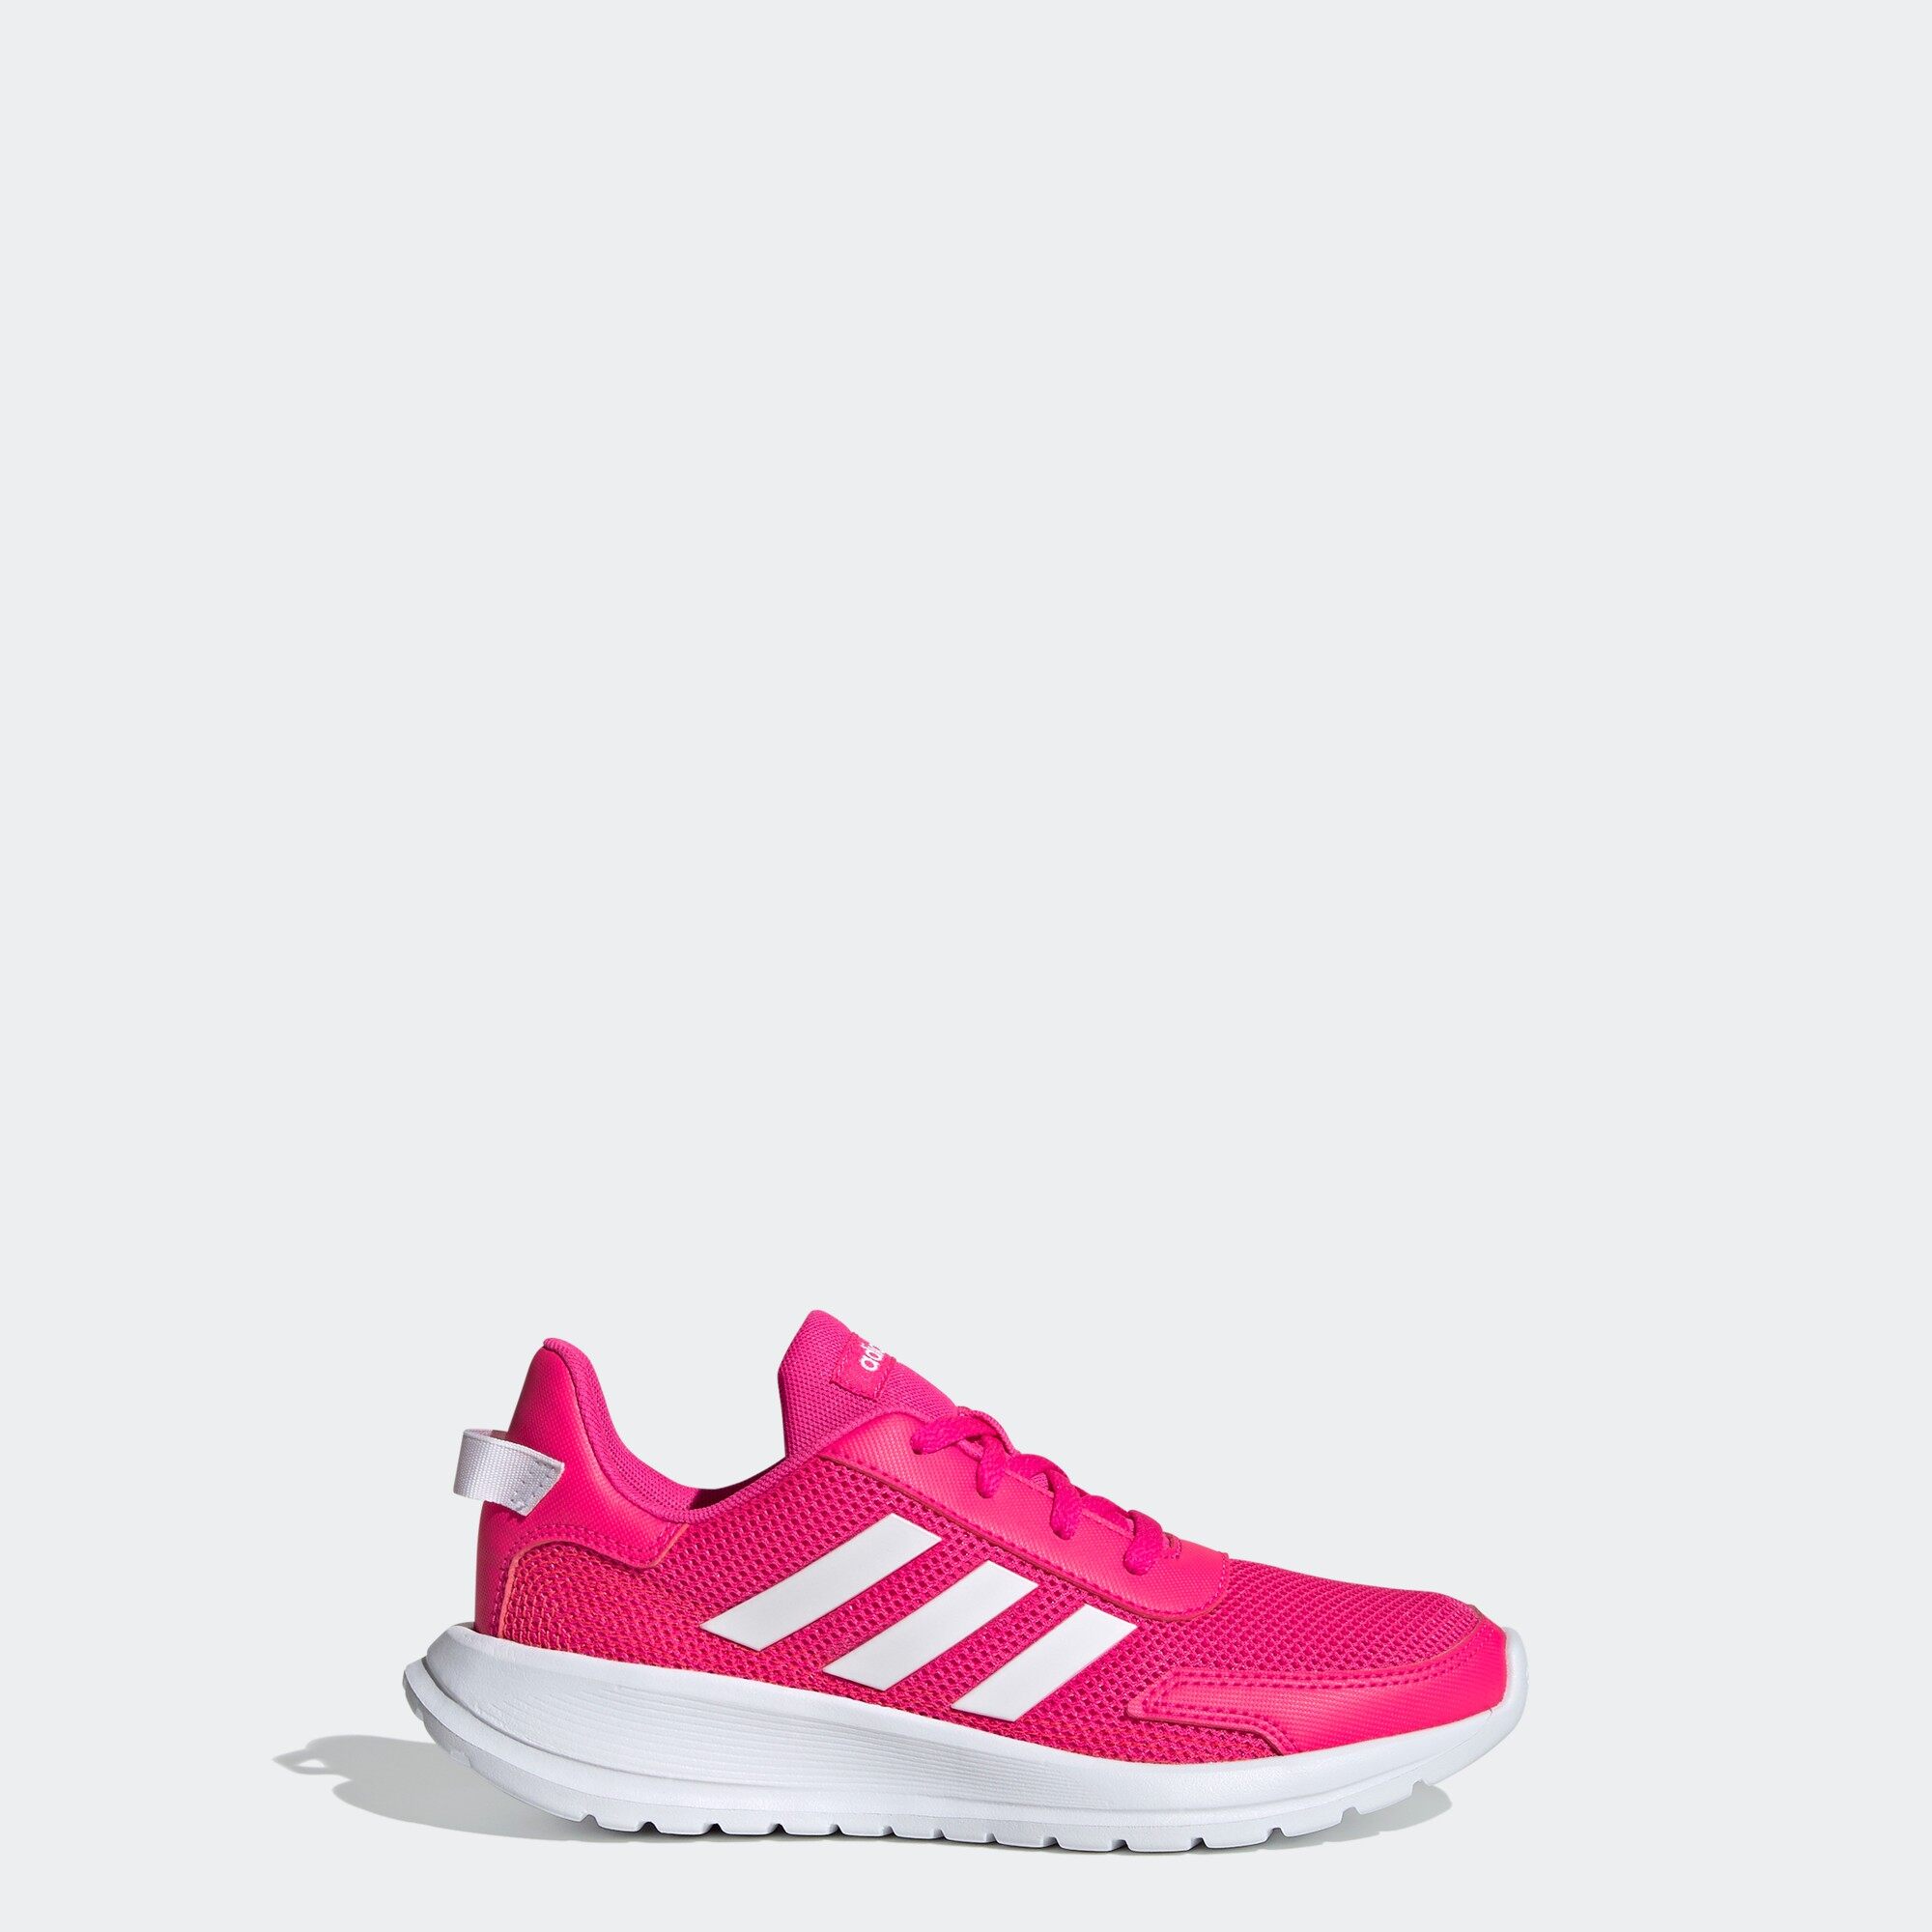 adidas รองเท้า Tensor เด็ก ไม่ระบุ เพศ Pink